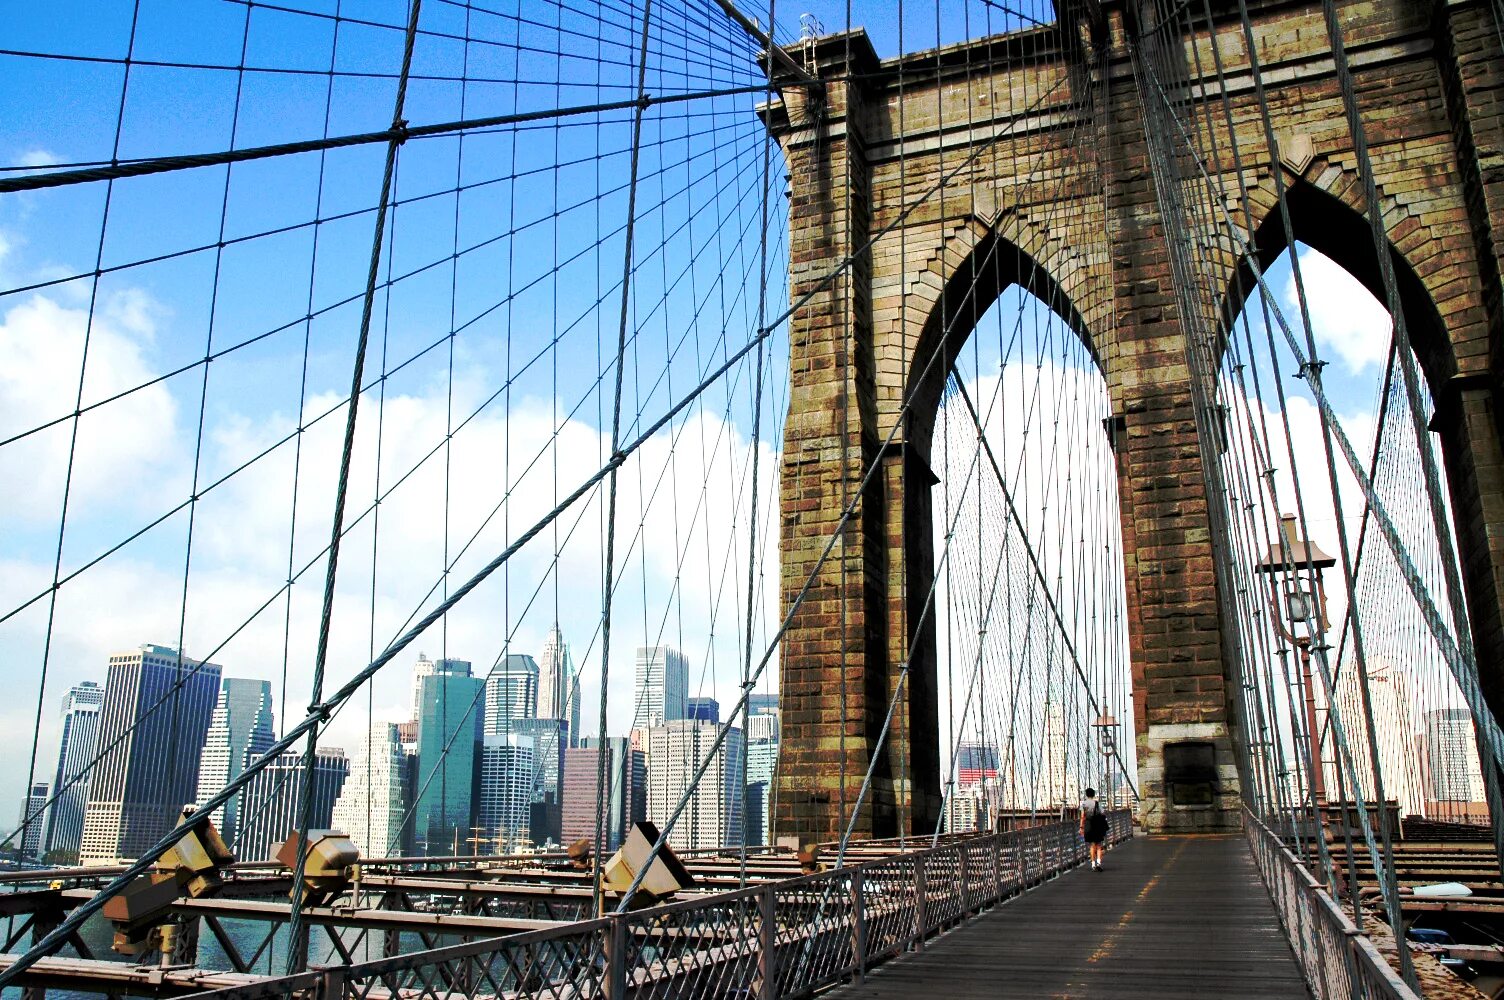 Бруклин мост. Бруклинский мост, Нью-Йорк, США. Буринский мост Нью-Йорк. Достопримечательности Нью Йорка Бруклинский мост. Бру́клинский мост в Нью-Йорке.